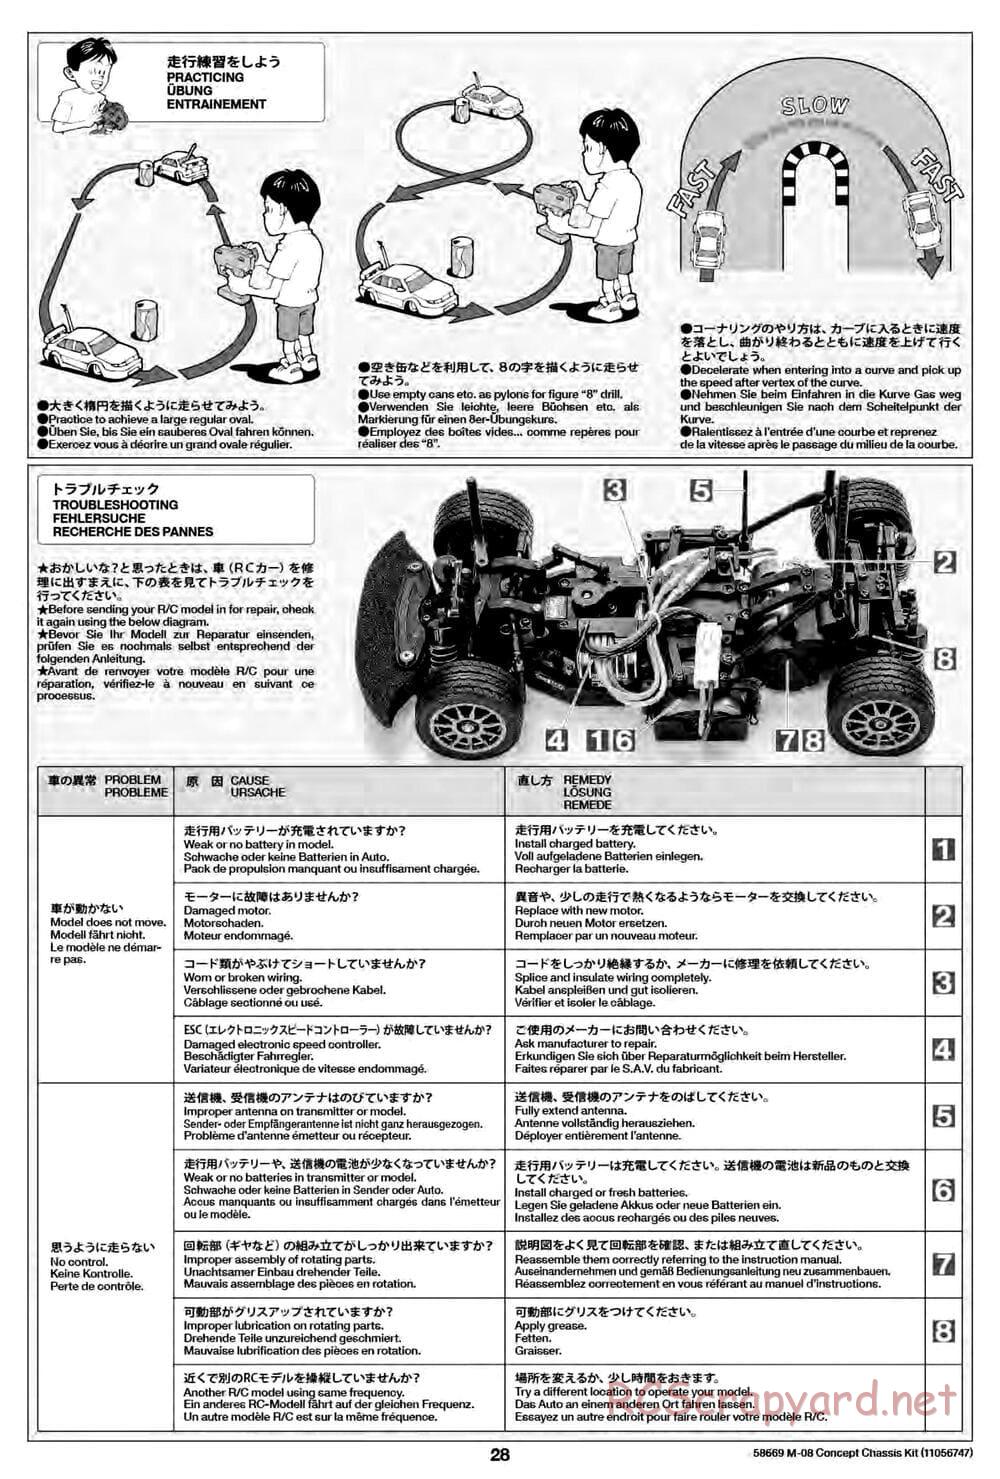 Tamiya - M-08 Concept Chassis - Manual - Page 28